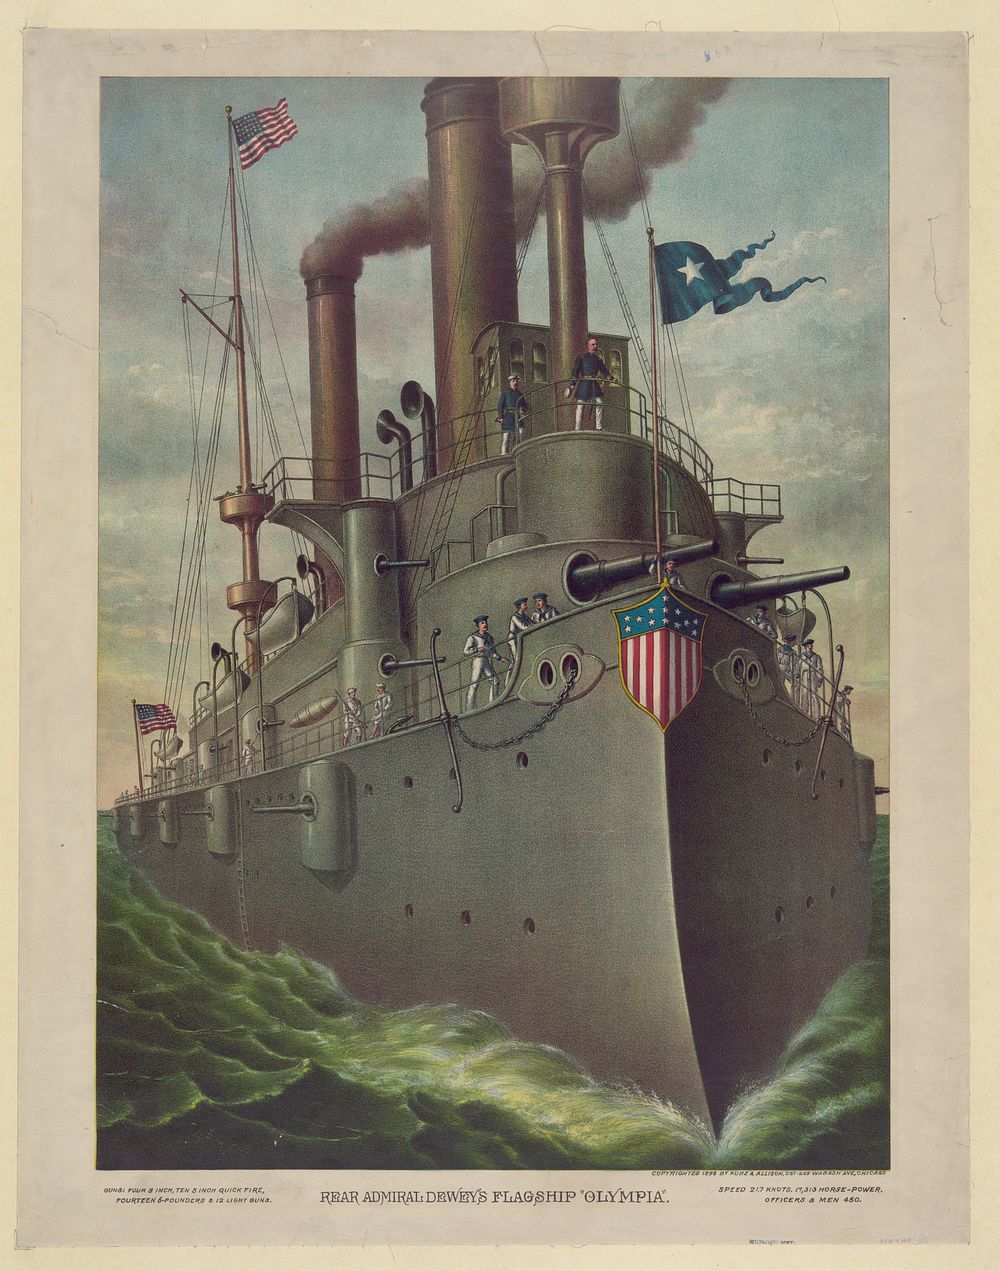 Rear Admiral Dewey's flagship "Olympia", Kurz & Allison.